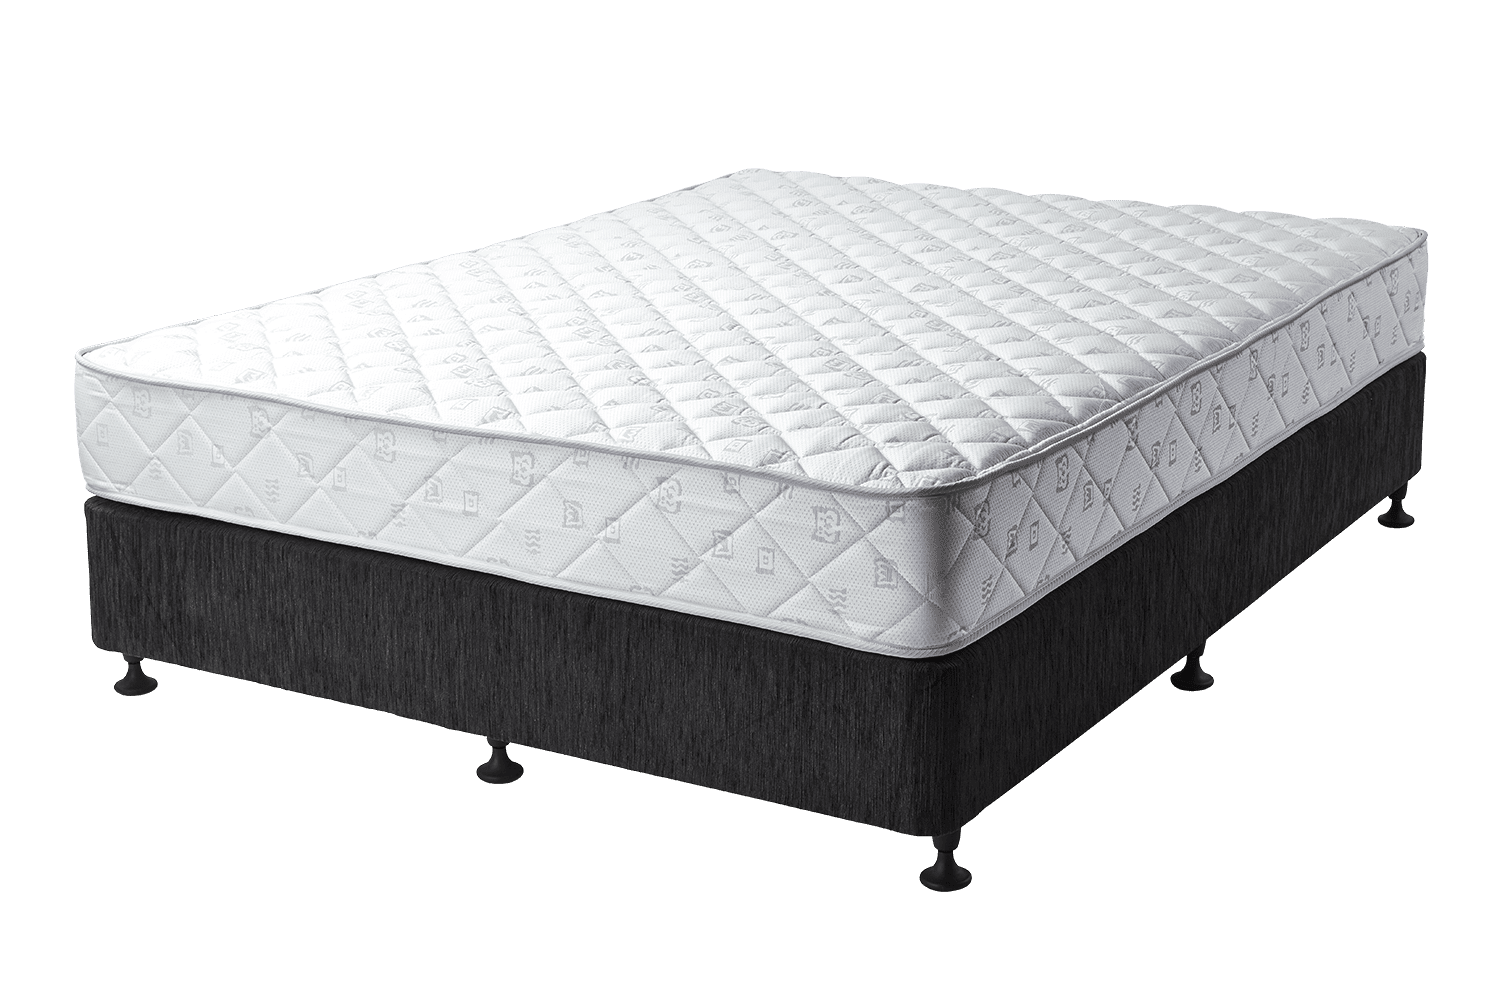 mattresses for sale toronto